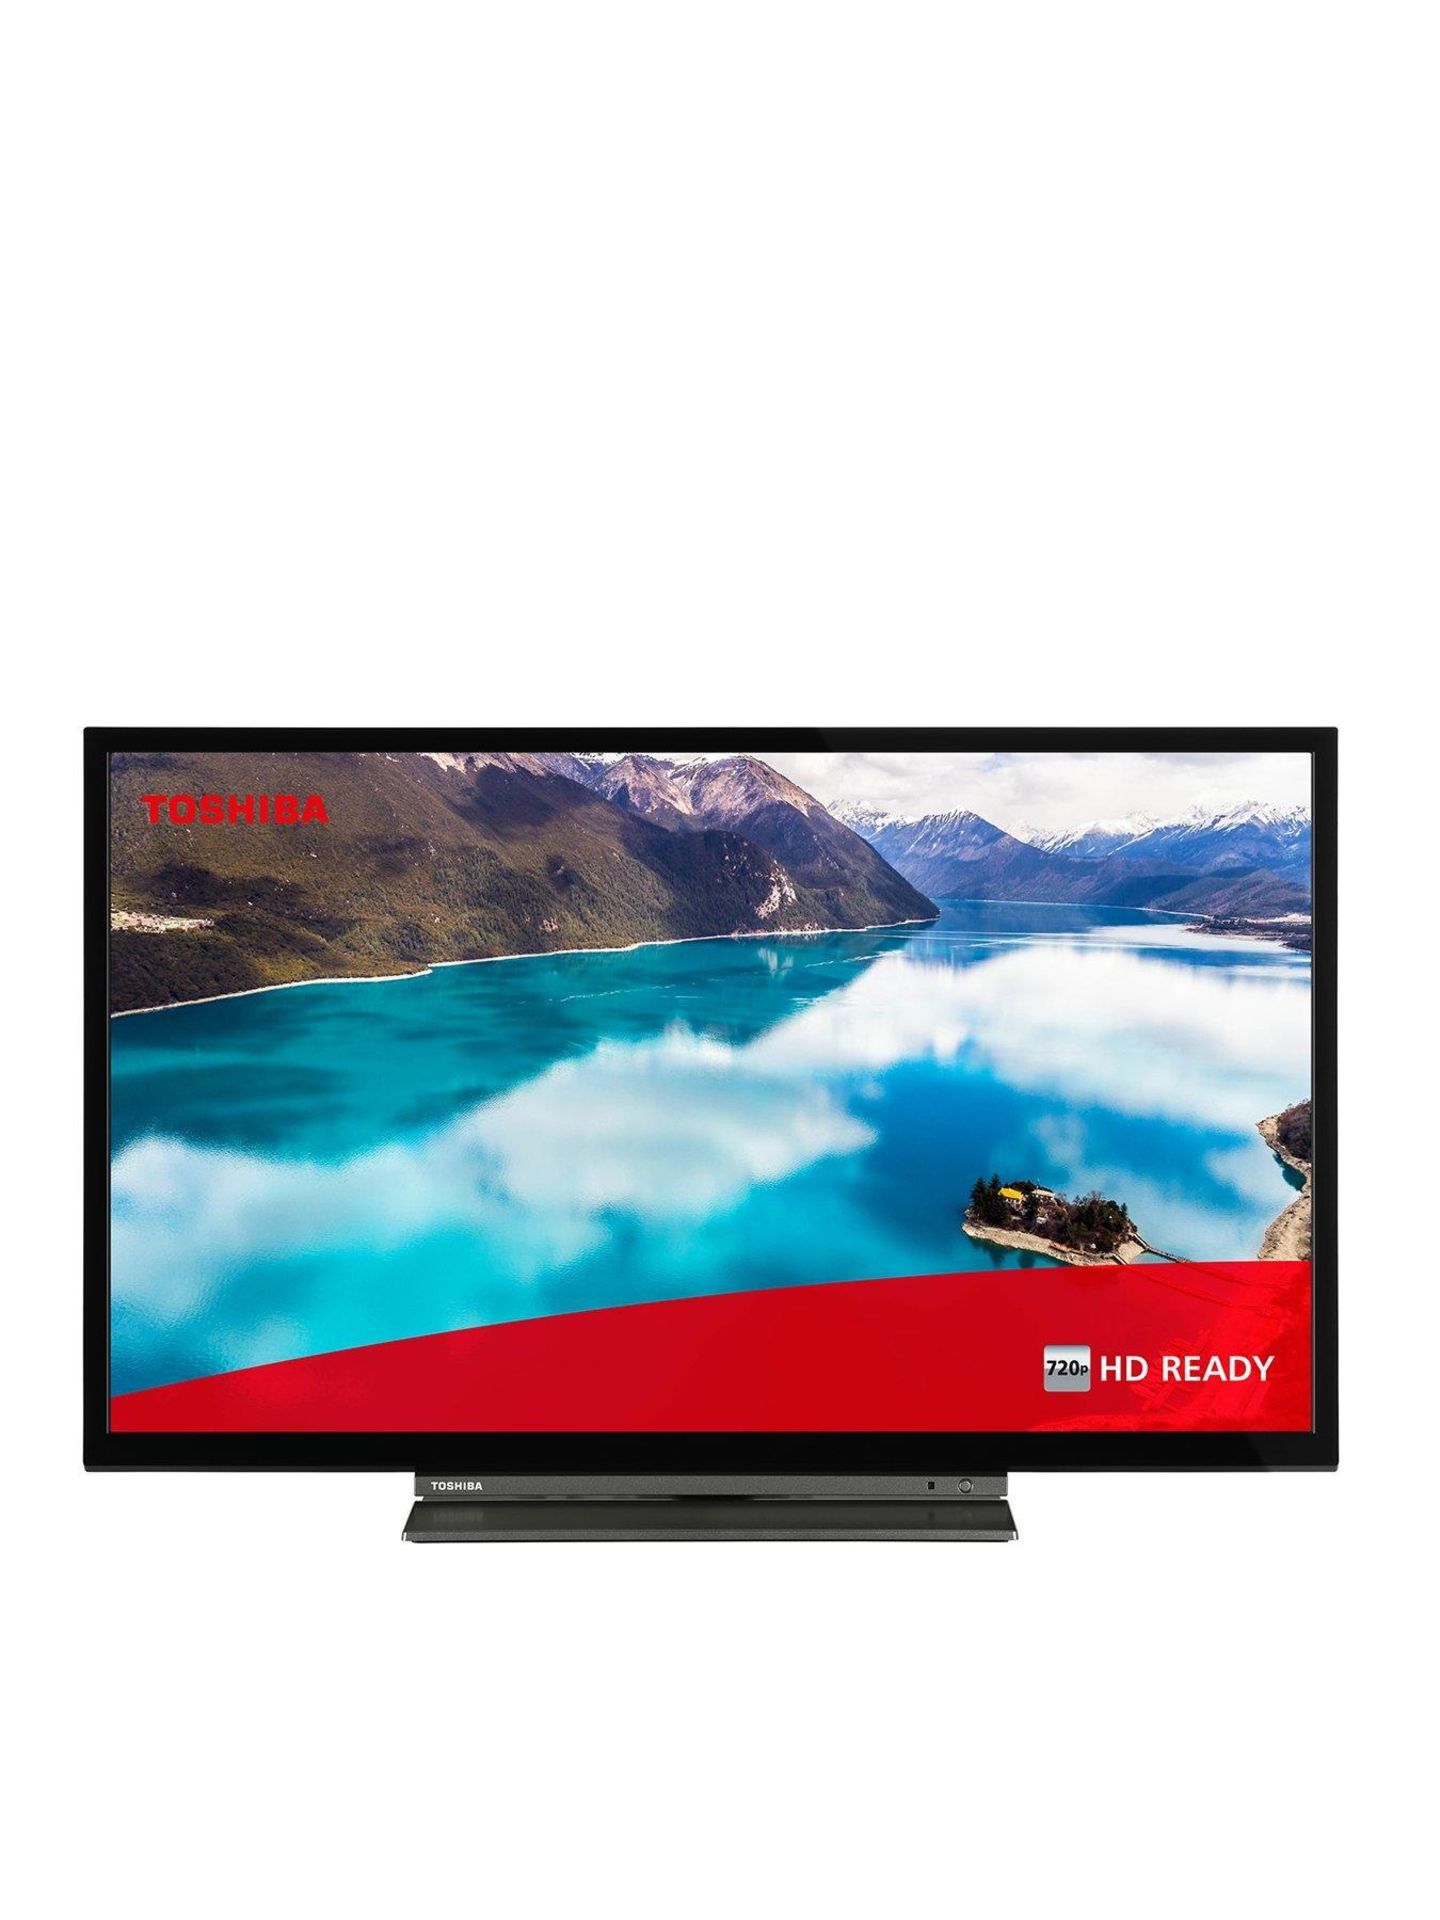 Toshiba 32wl3a63db 32 inch hd ready, freeview play, smart tv [black] 78x74x19cm rrp: £358.0 - Image 2 of 2